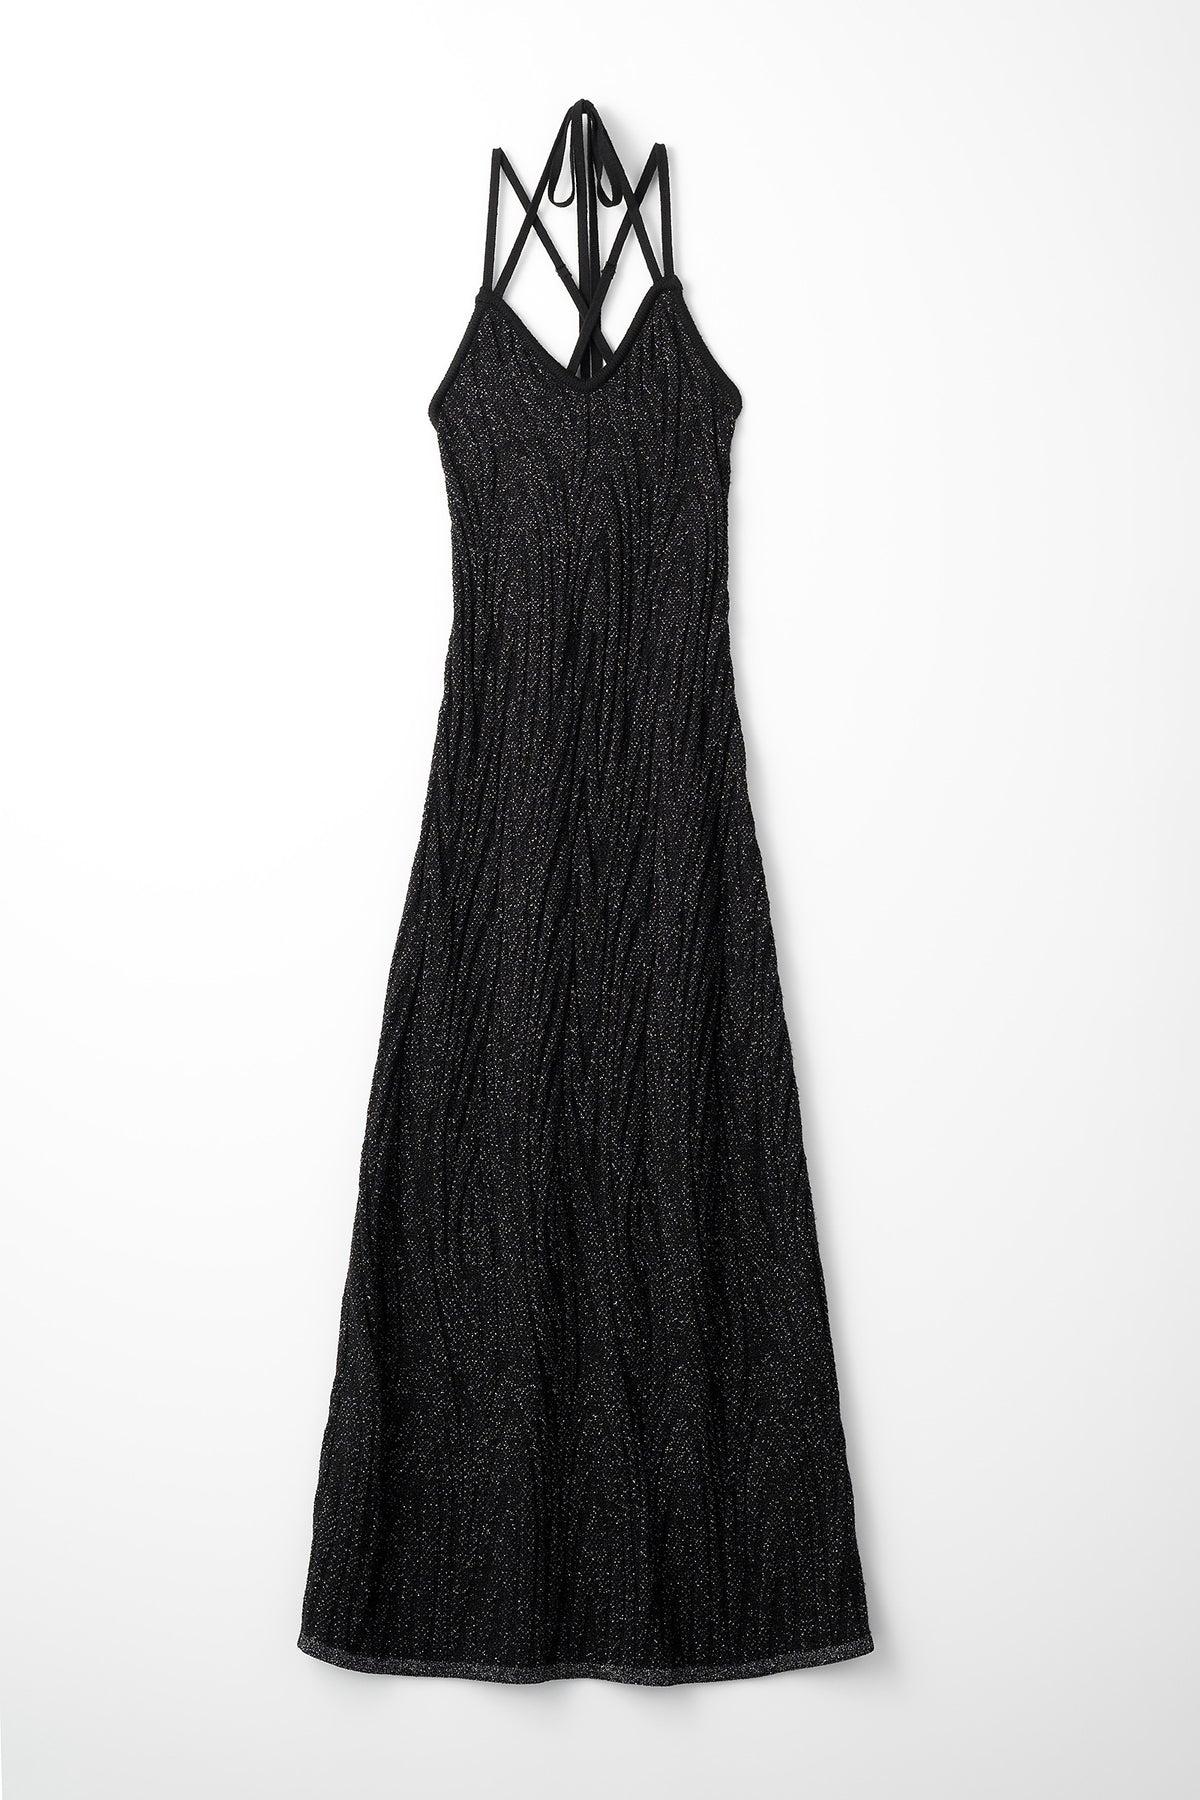 Frost knit camisole dress (Black)